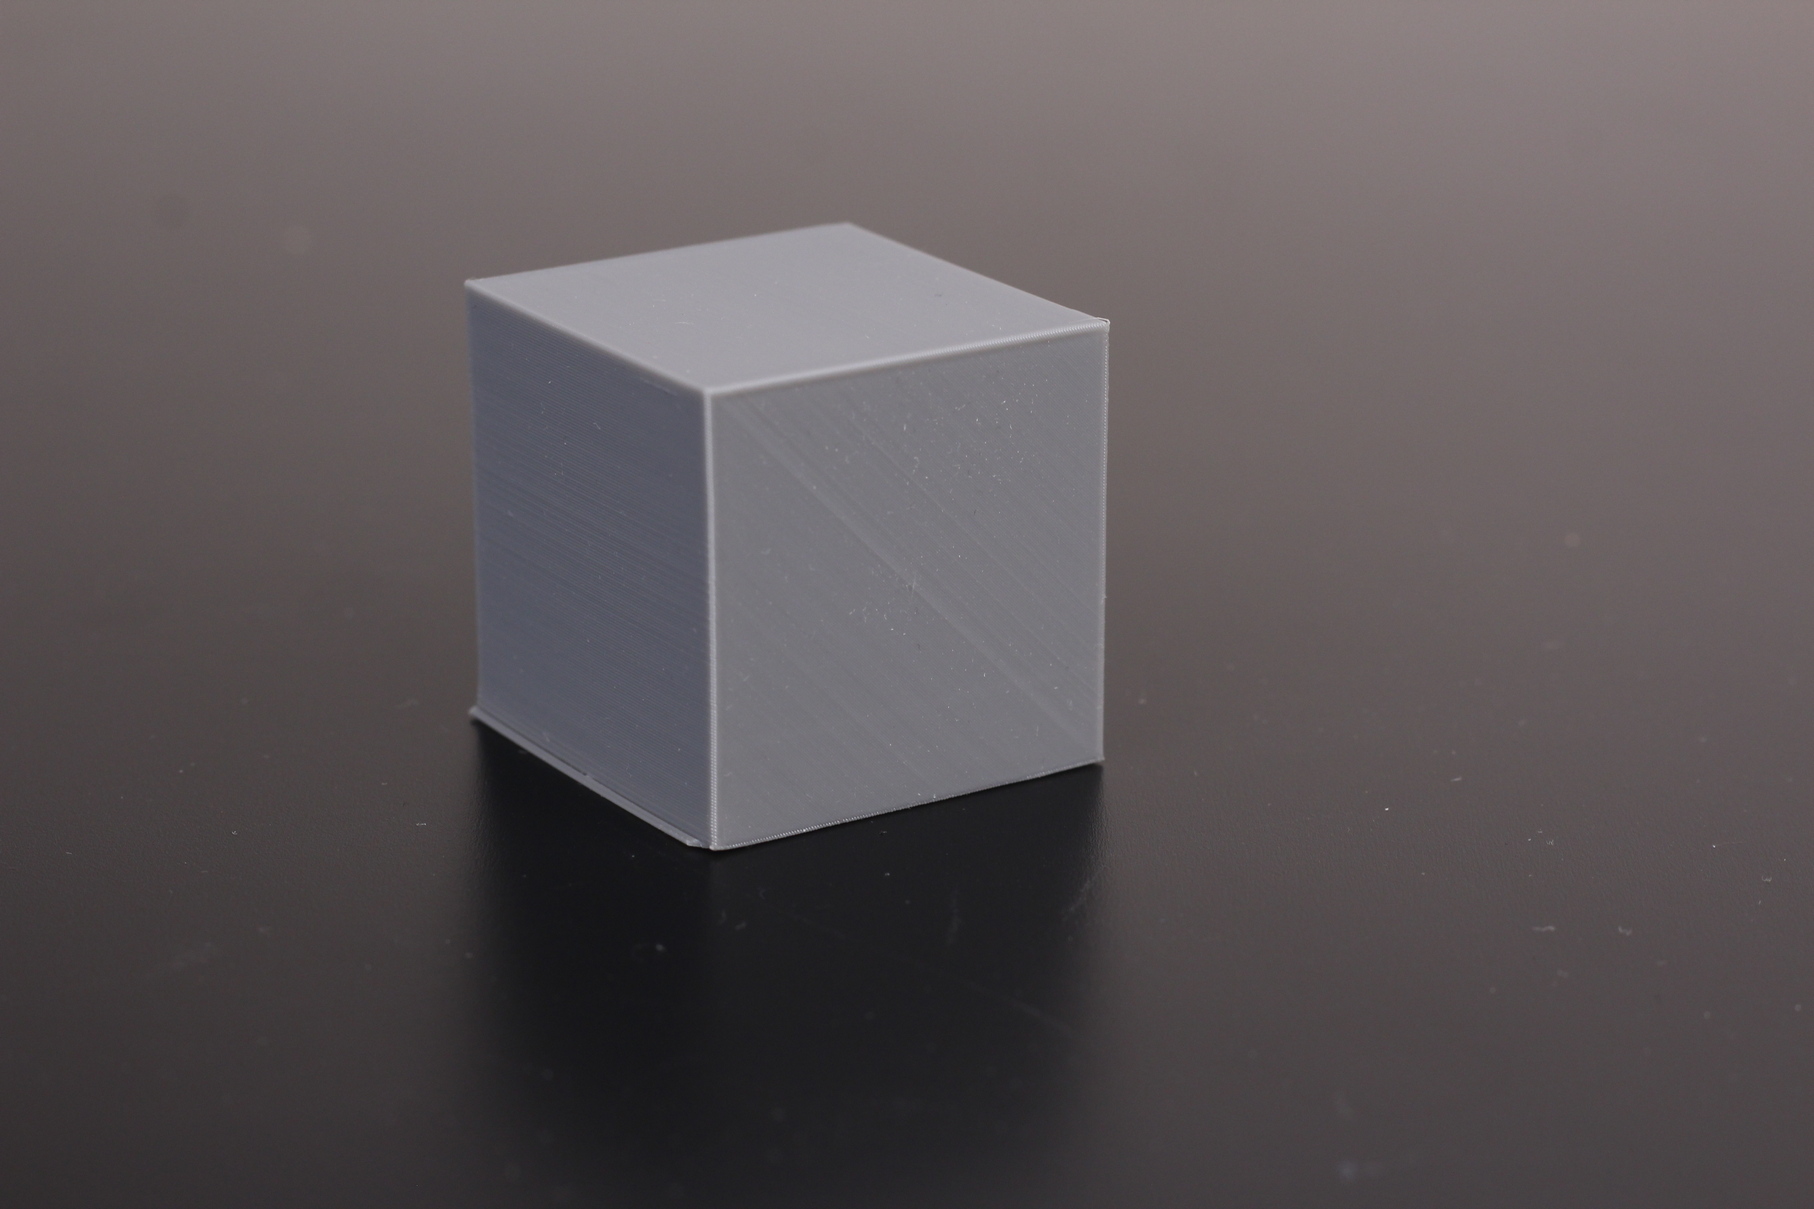 40x40 cube 1 | Creality 3DPrintMill (CR-30) Review: Belt Printer for Batch 3D Printing